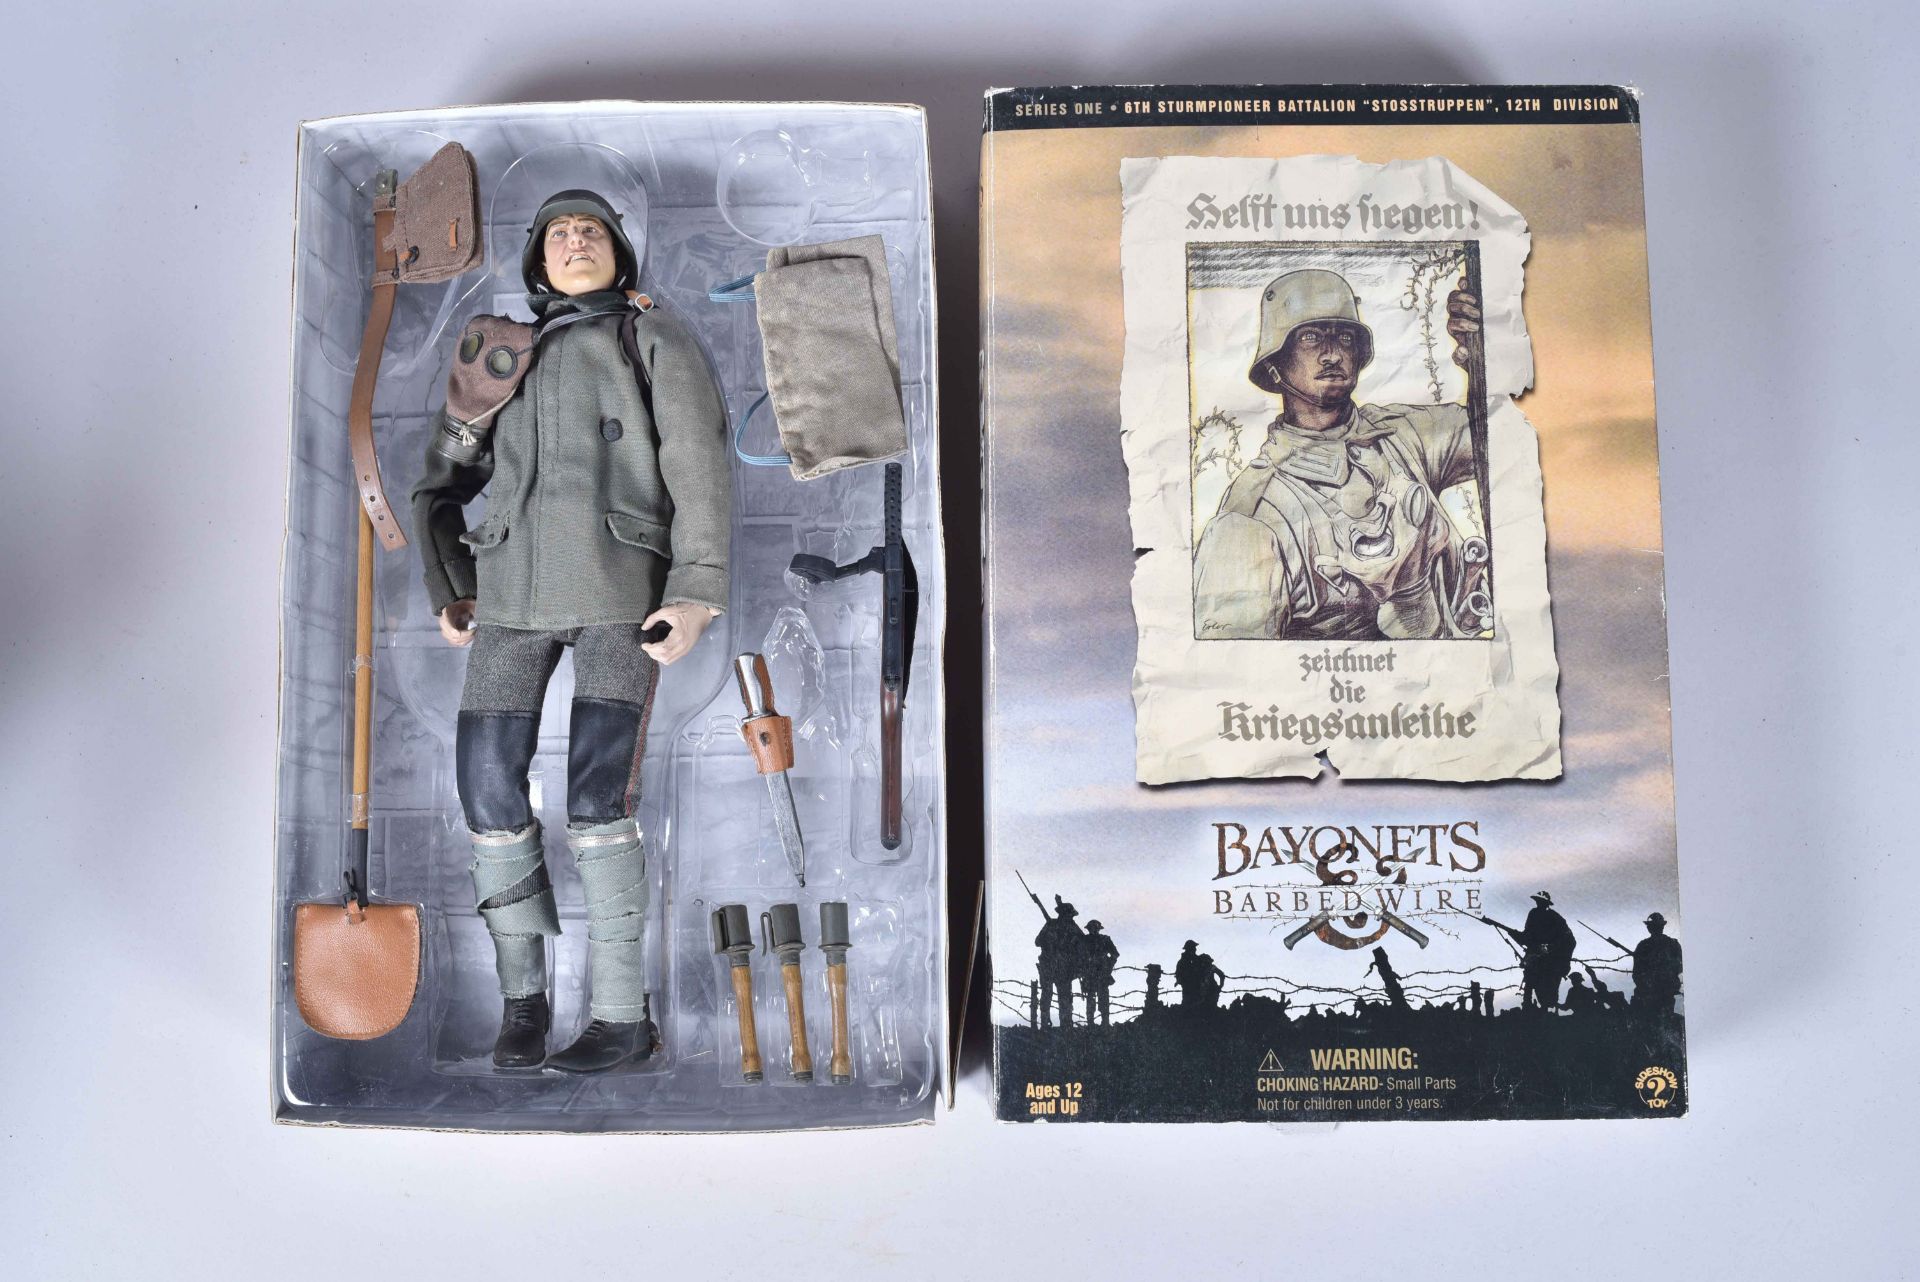 « Bayonets and barbed wire. » Grande figurine habillée de tissu avec équipement en cuir. Fantassin a